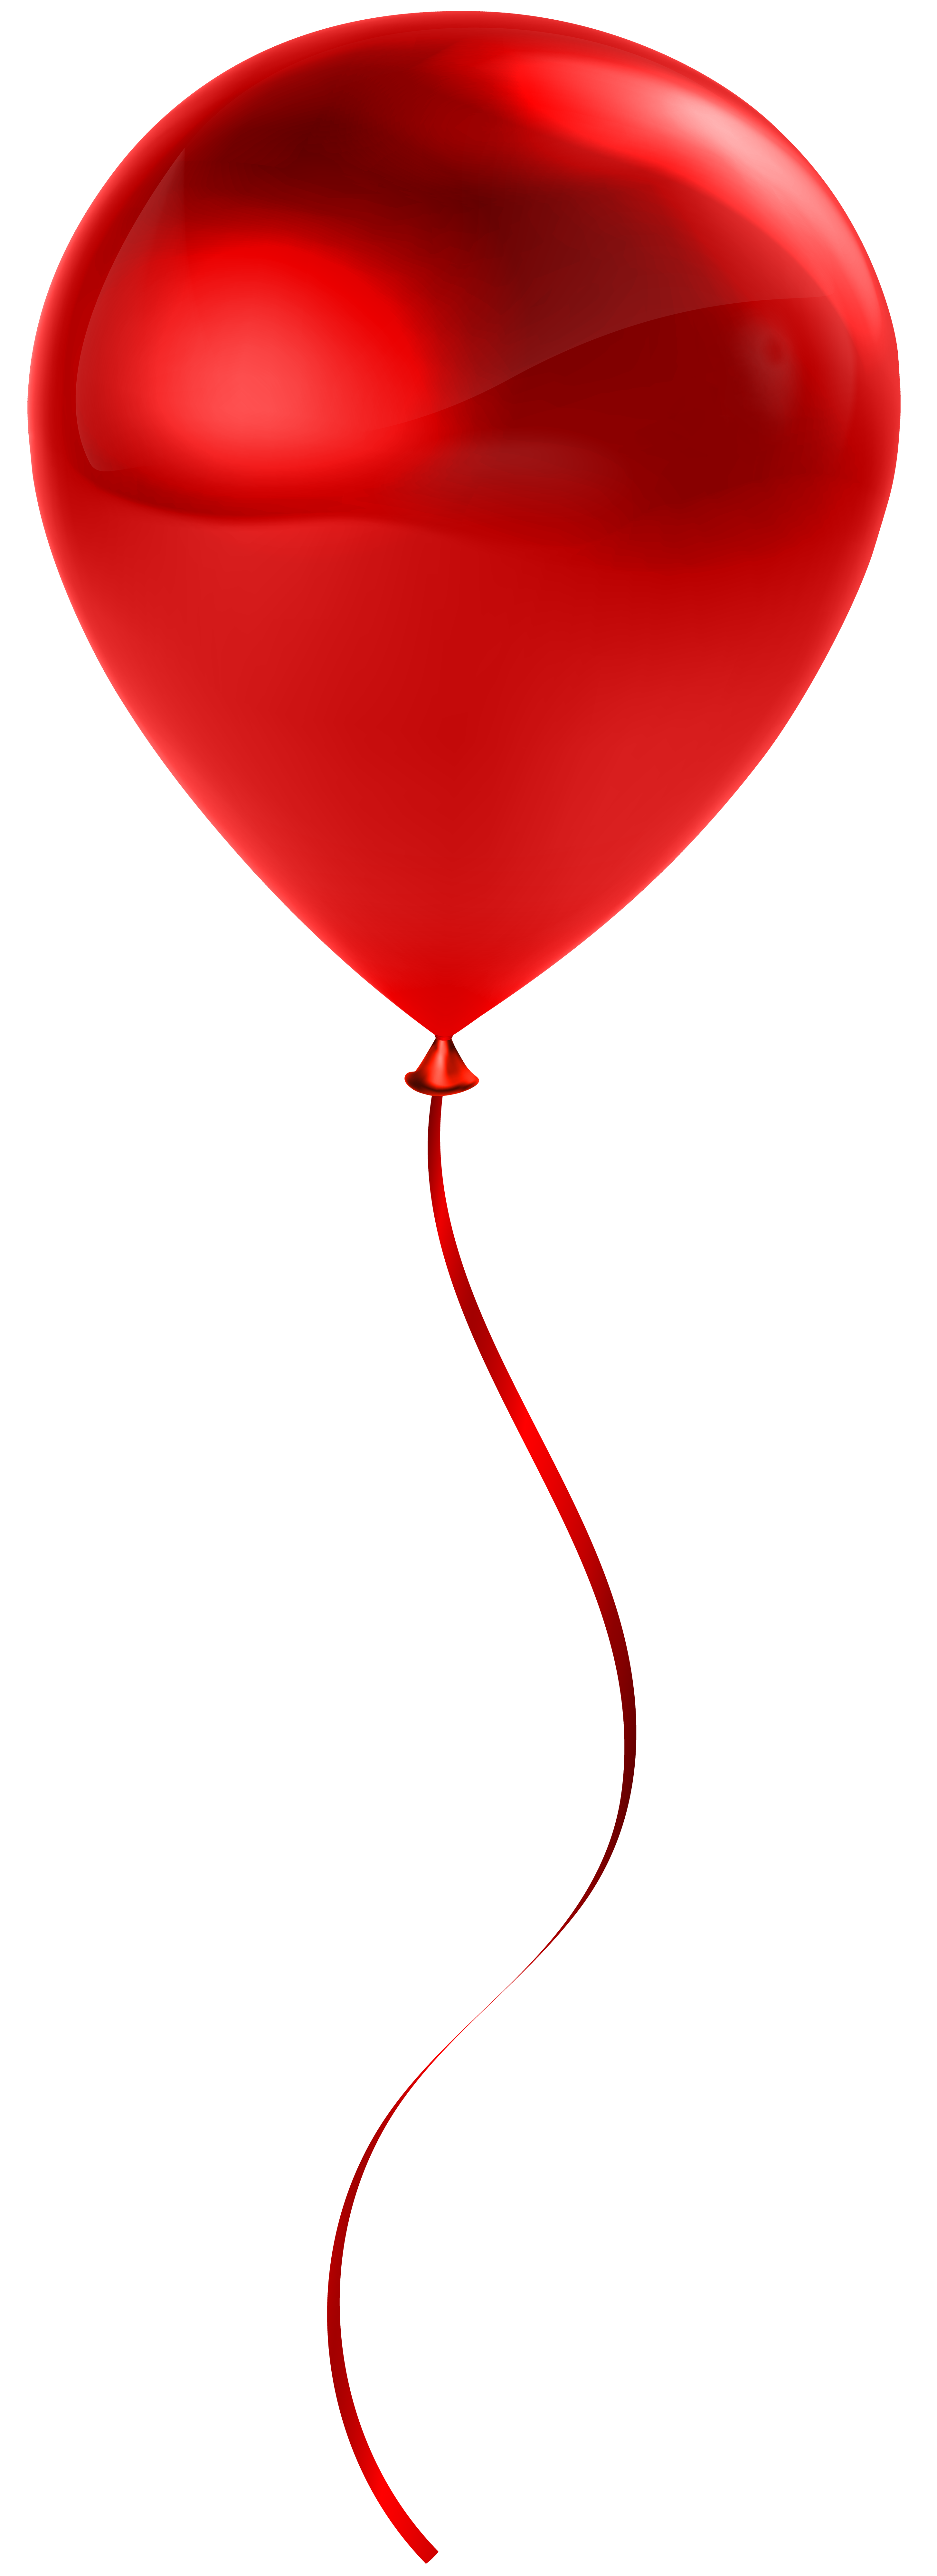 Red Balloon Heart Design - Single Red Balloon Transparent Clip Art png ...